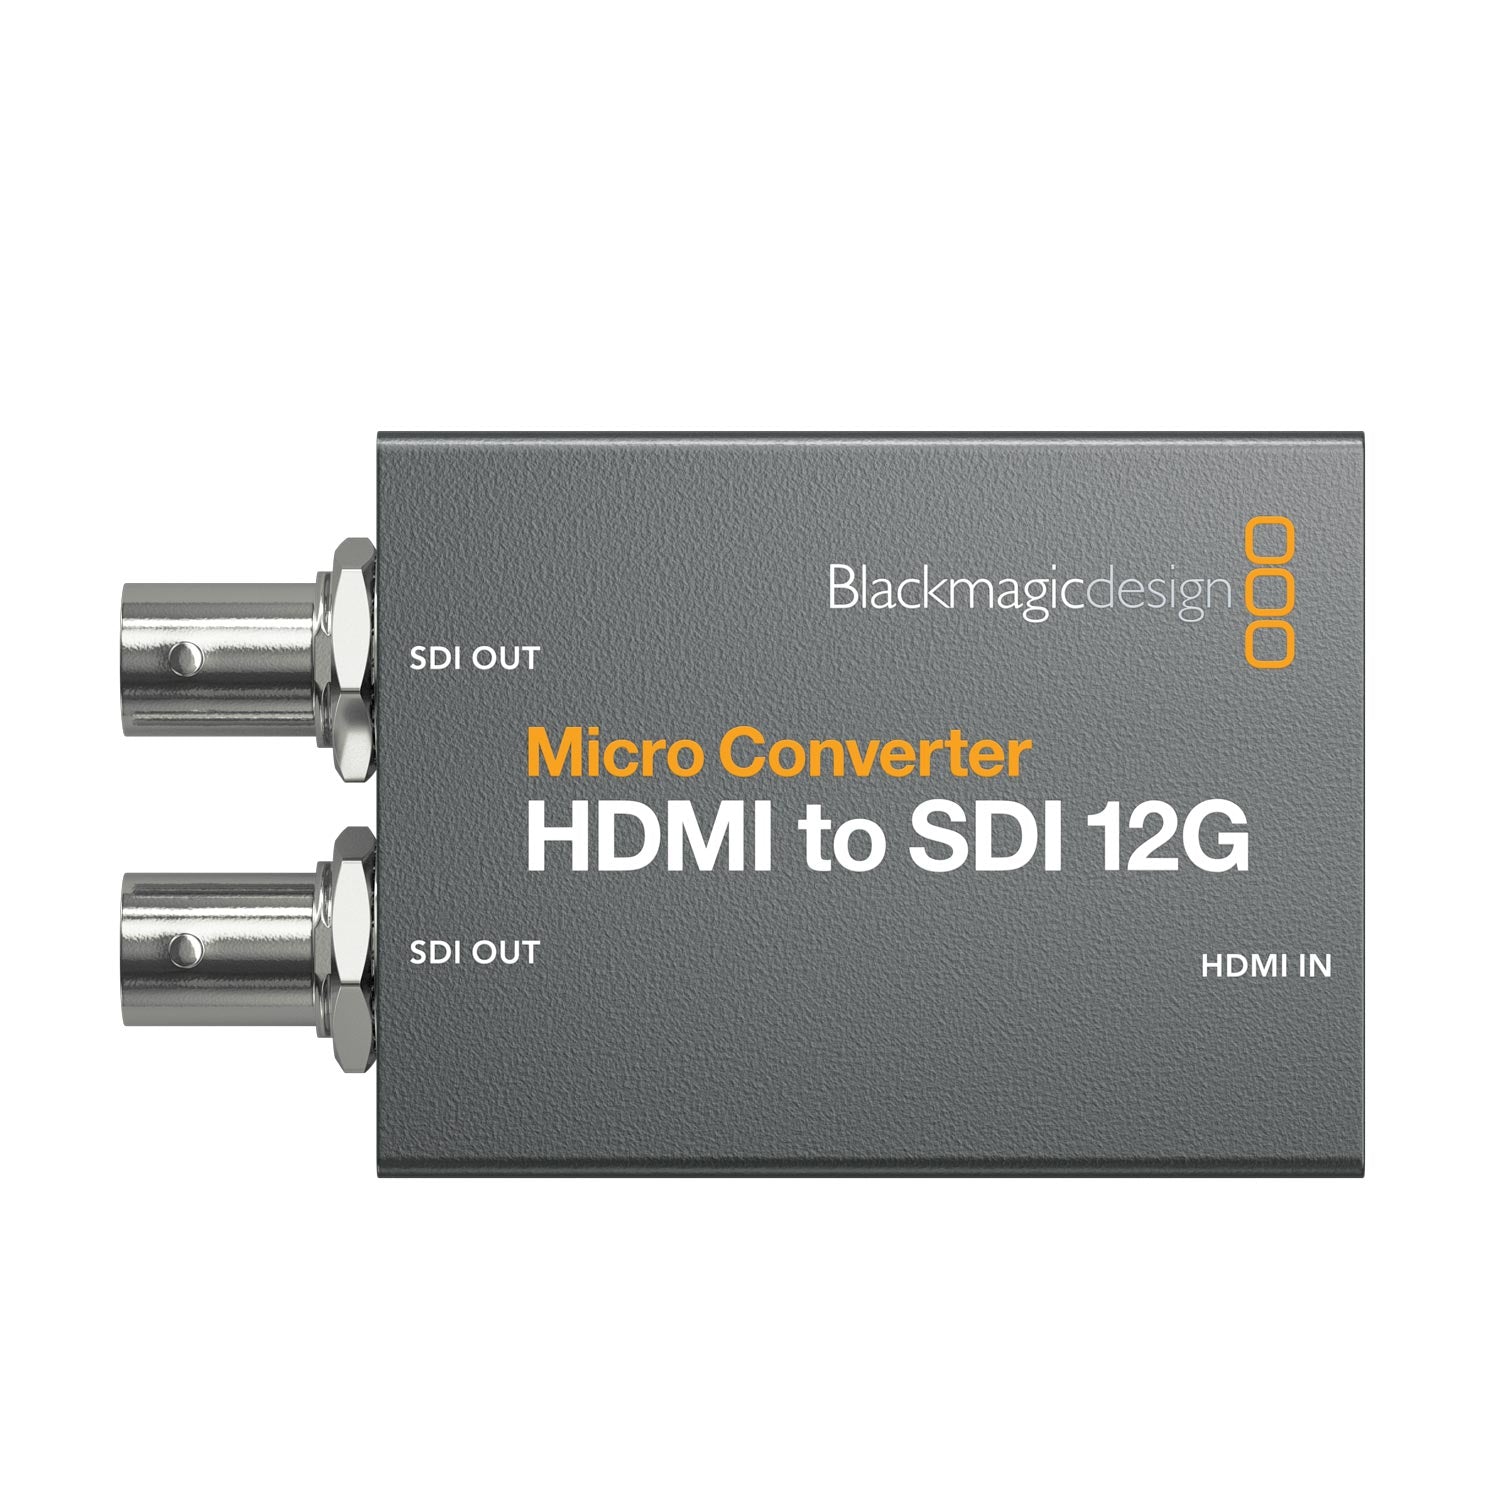 BlackmagicDesign Micro Converter HDMI to SDI 12G (パワーサプライ なし)